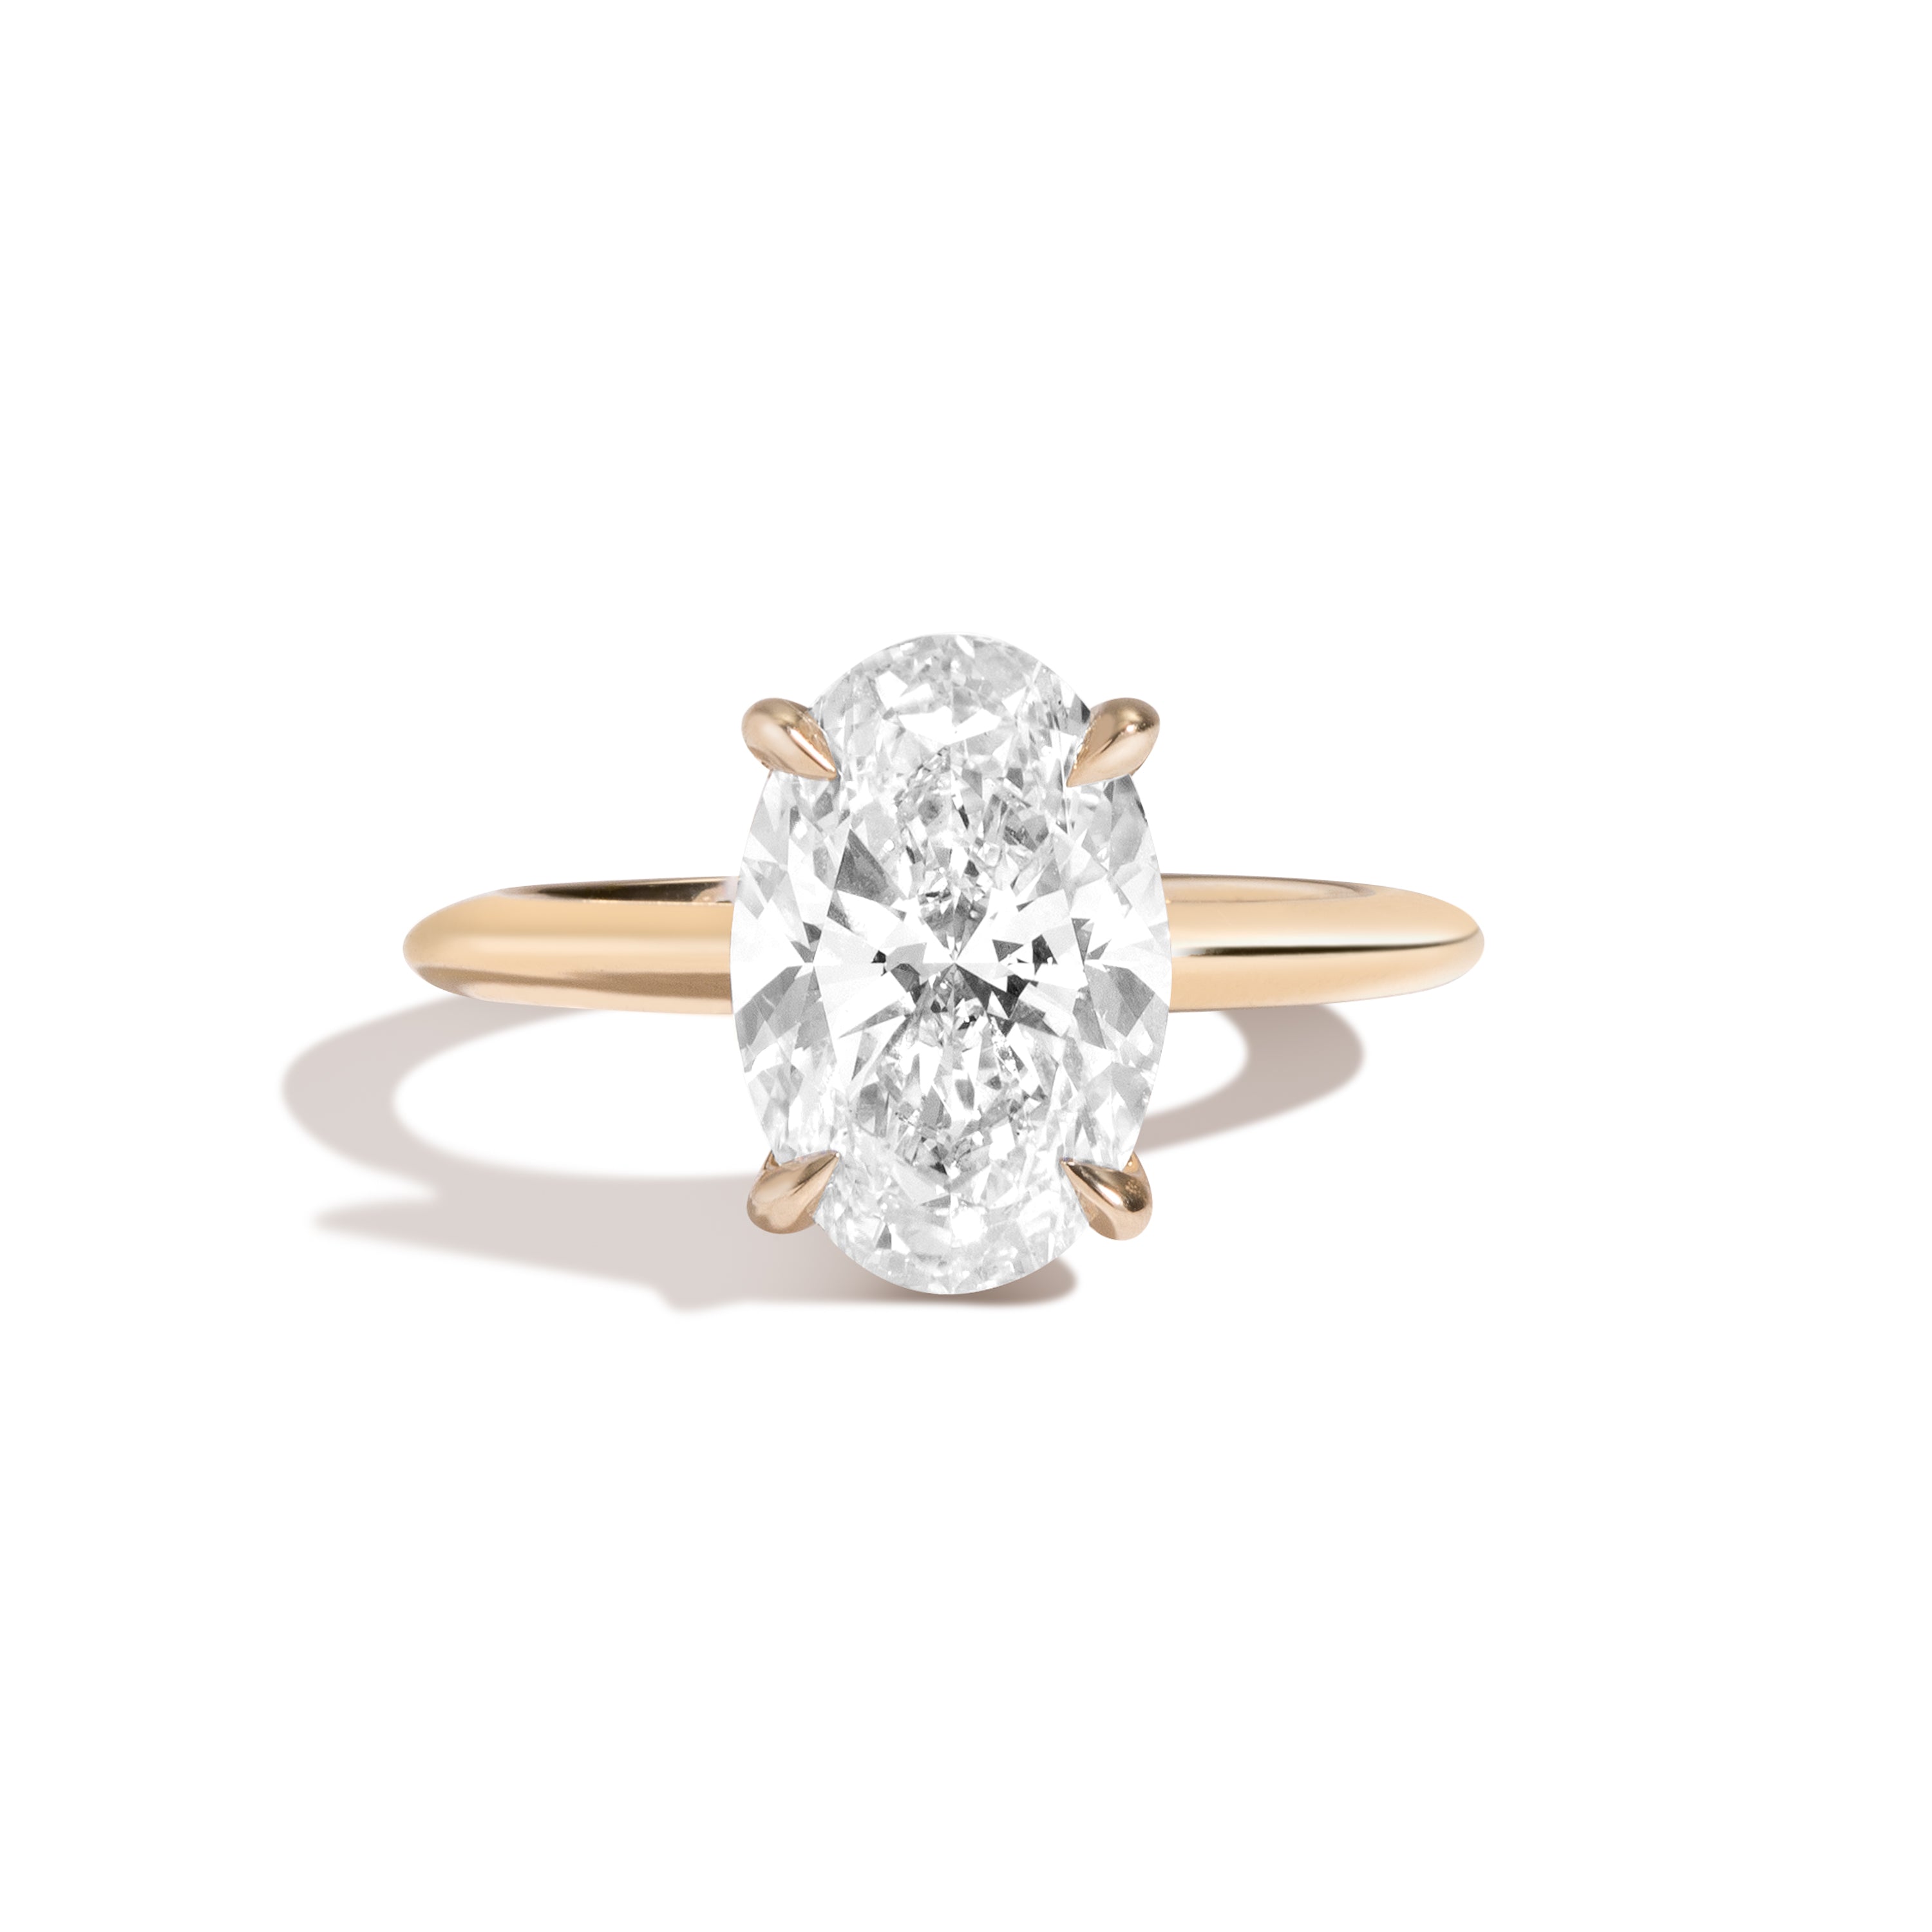 Shahla Karimi Shahla's Signature Railless Oval Engagement Ring 14K Yellow Gold